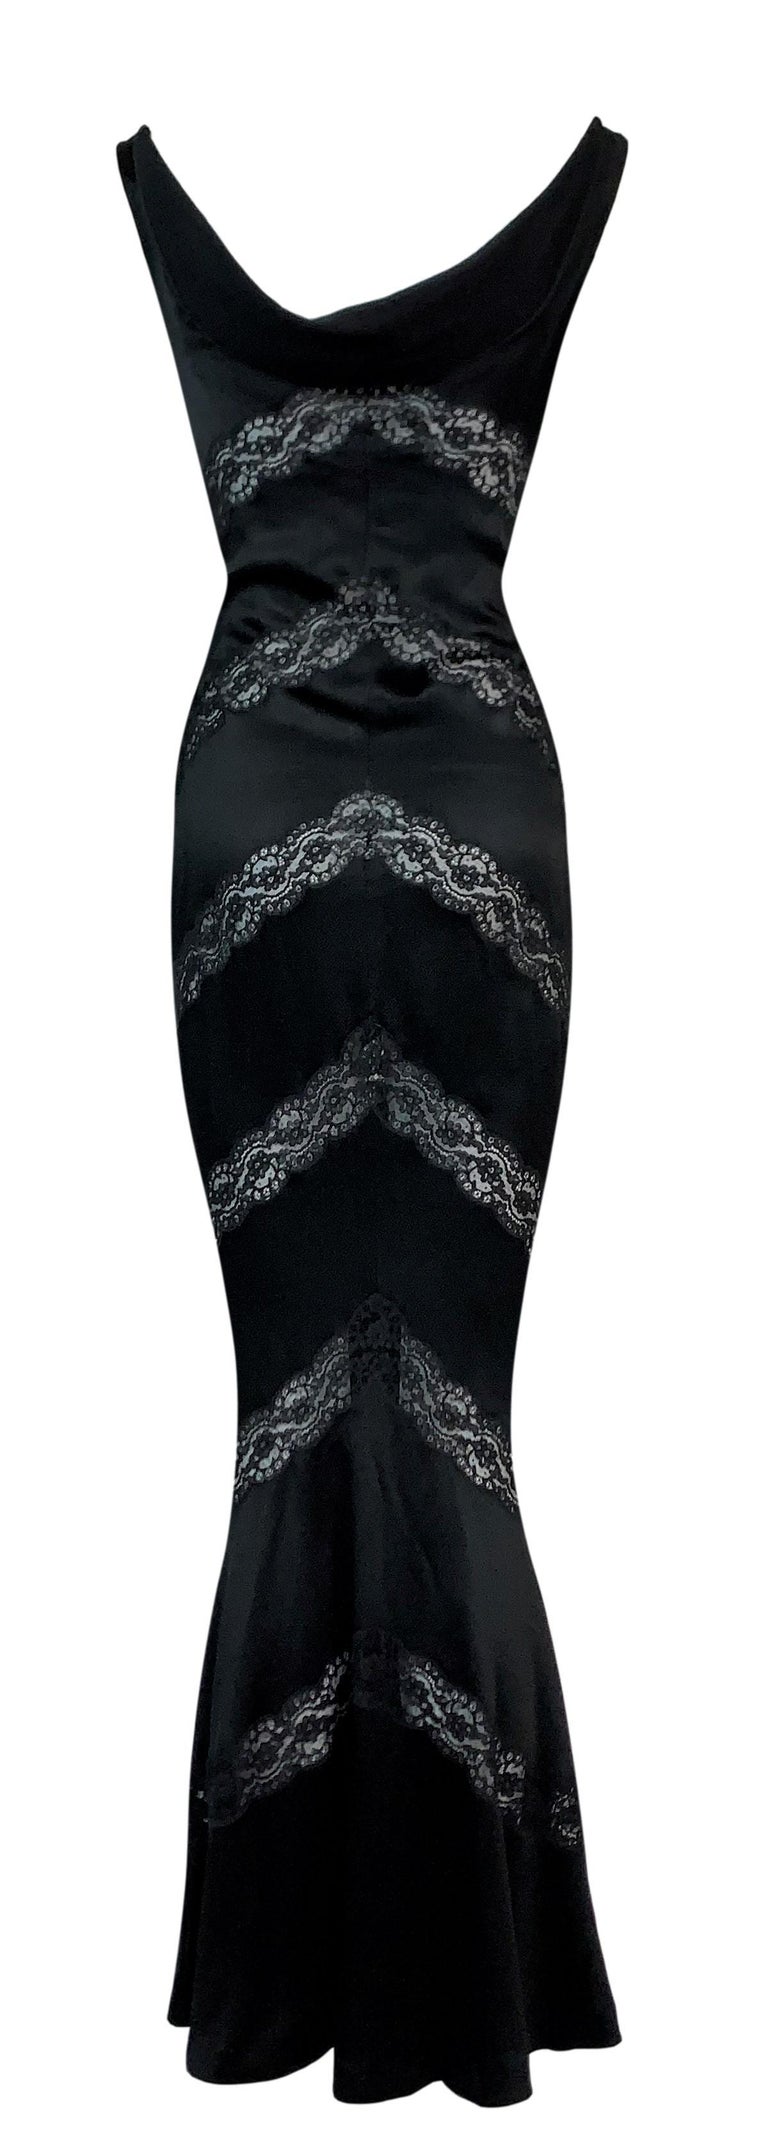 S/S 1999 Christian Dior John Galliano Sheer Black Lace Mermaid Maxi ...